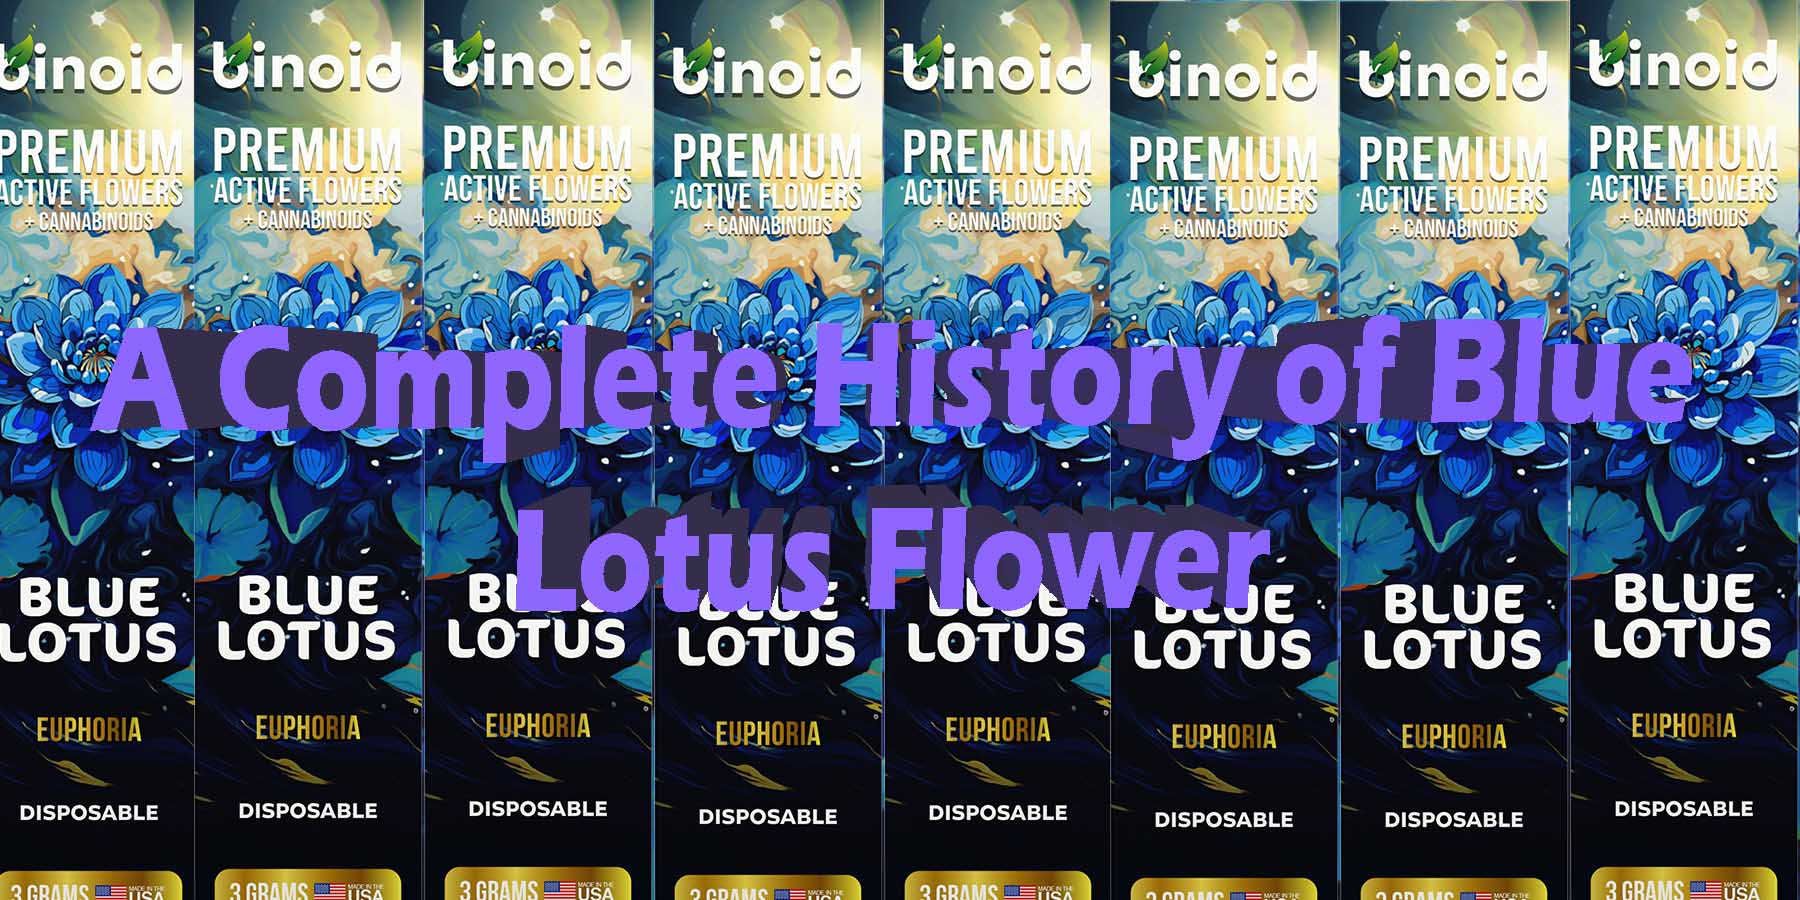 A Complete History of Blue Lotus Flower What Are The Side Effects of Blue Lotus Flower What Is Blue Lotus Active Flowers Cannabinoids WhereToBuy HowToBuy StrongestBrand BestBrand